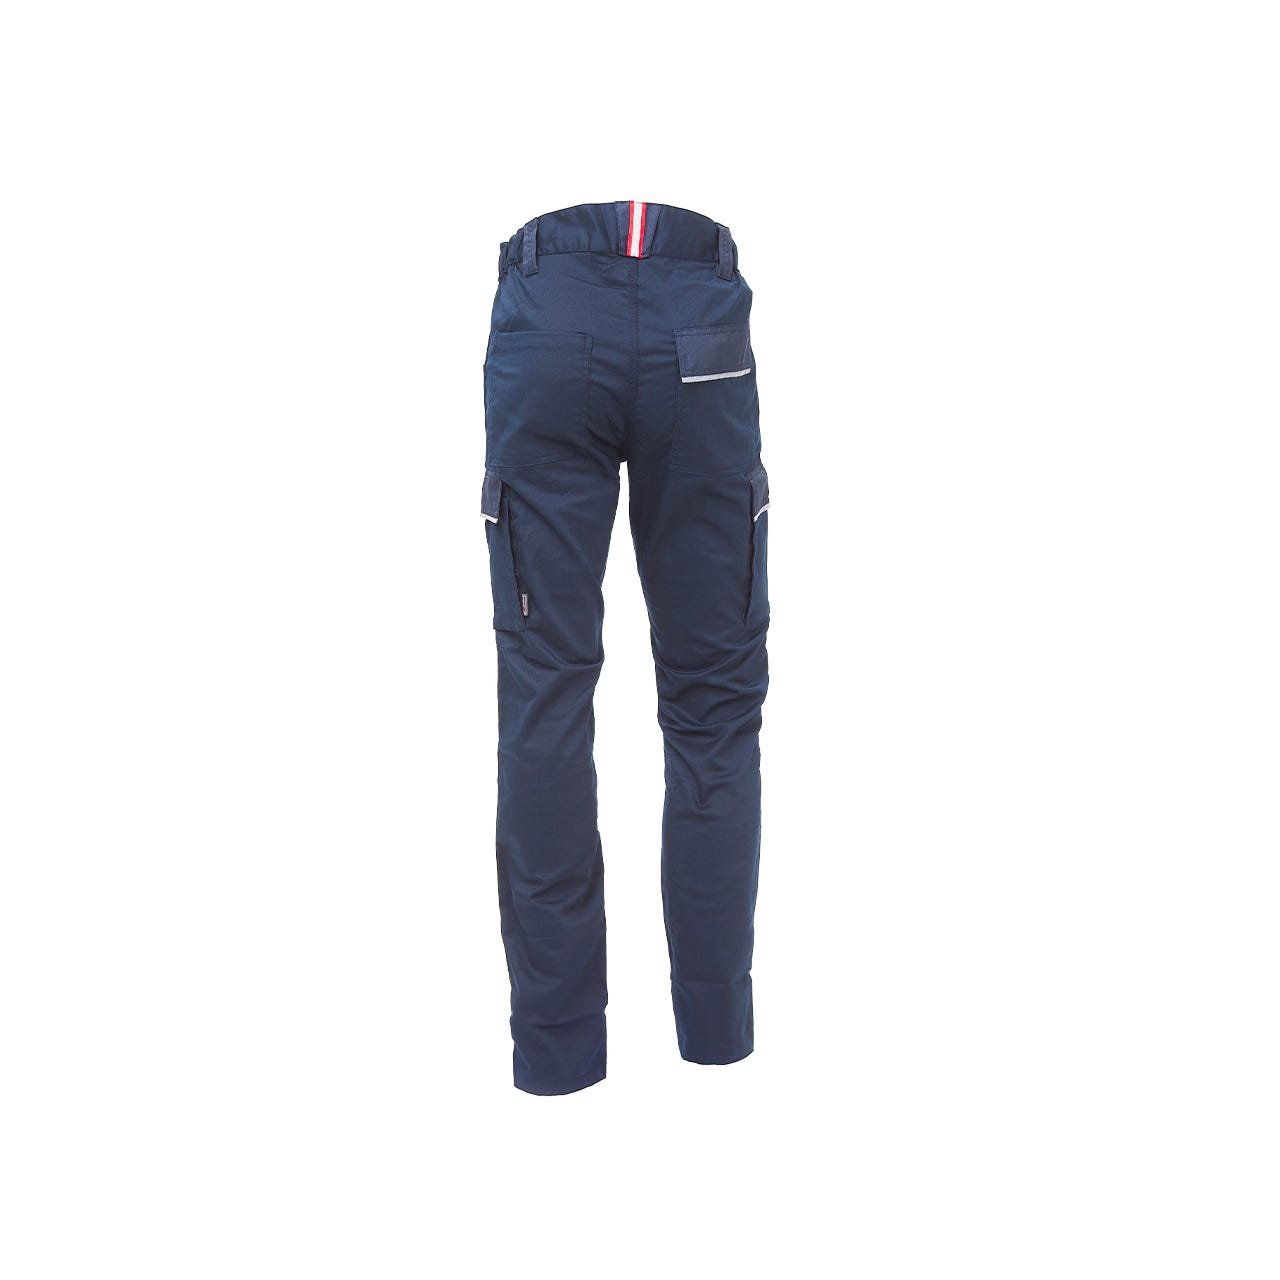 U-Power - Pantalon de travail bleu foncé Stretch et Slim CRAZY - Bleu Foncé - XL 4